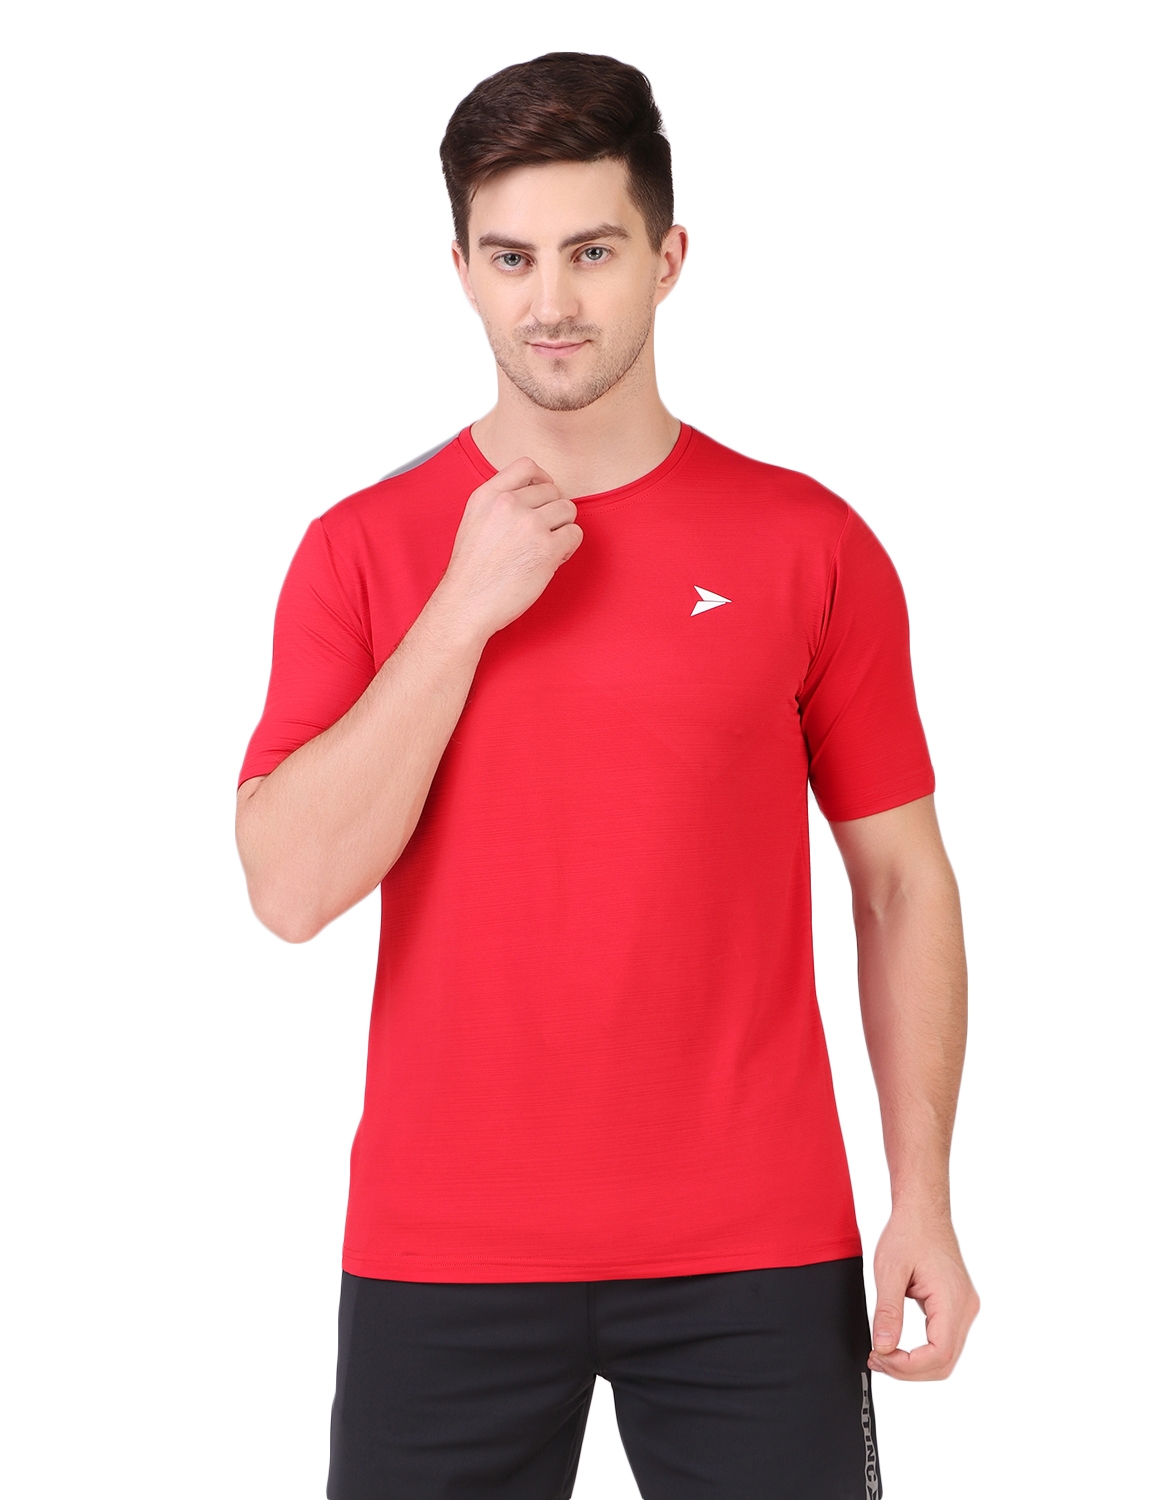 Fitinc Men's Round Neck Slimfit Gym & Active Sports Red T-Shirt